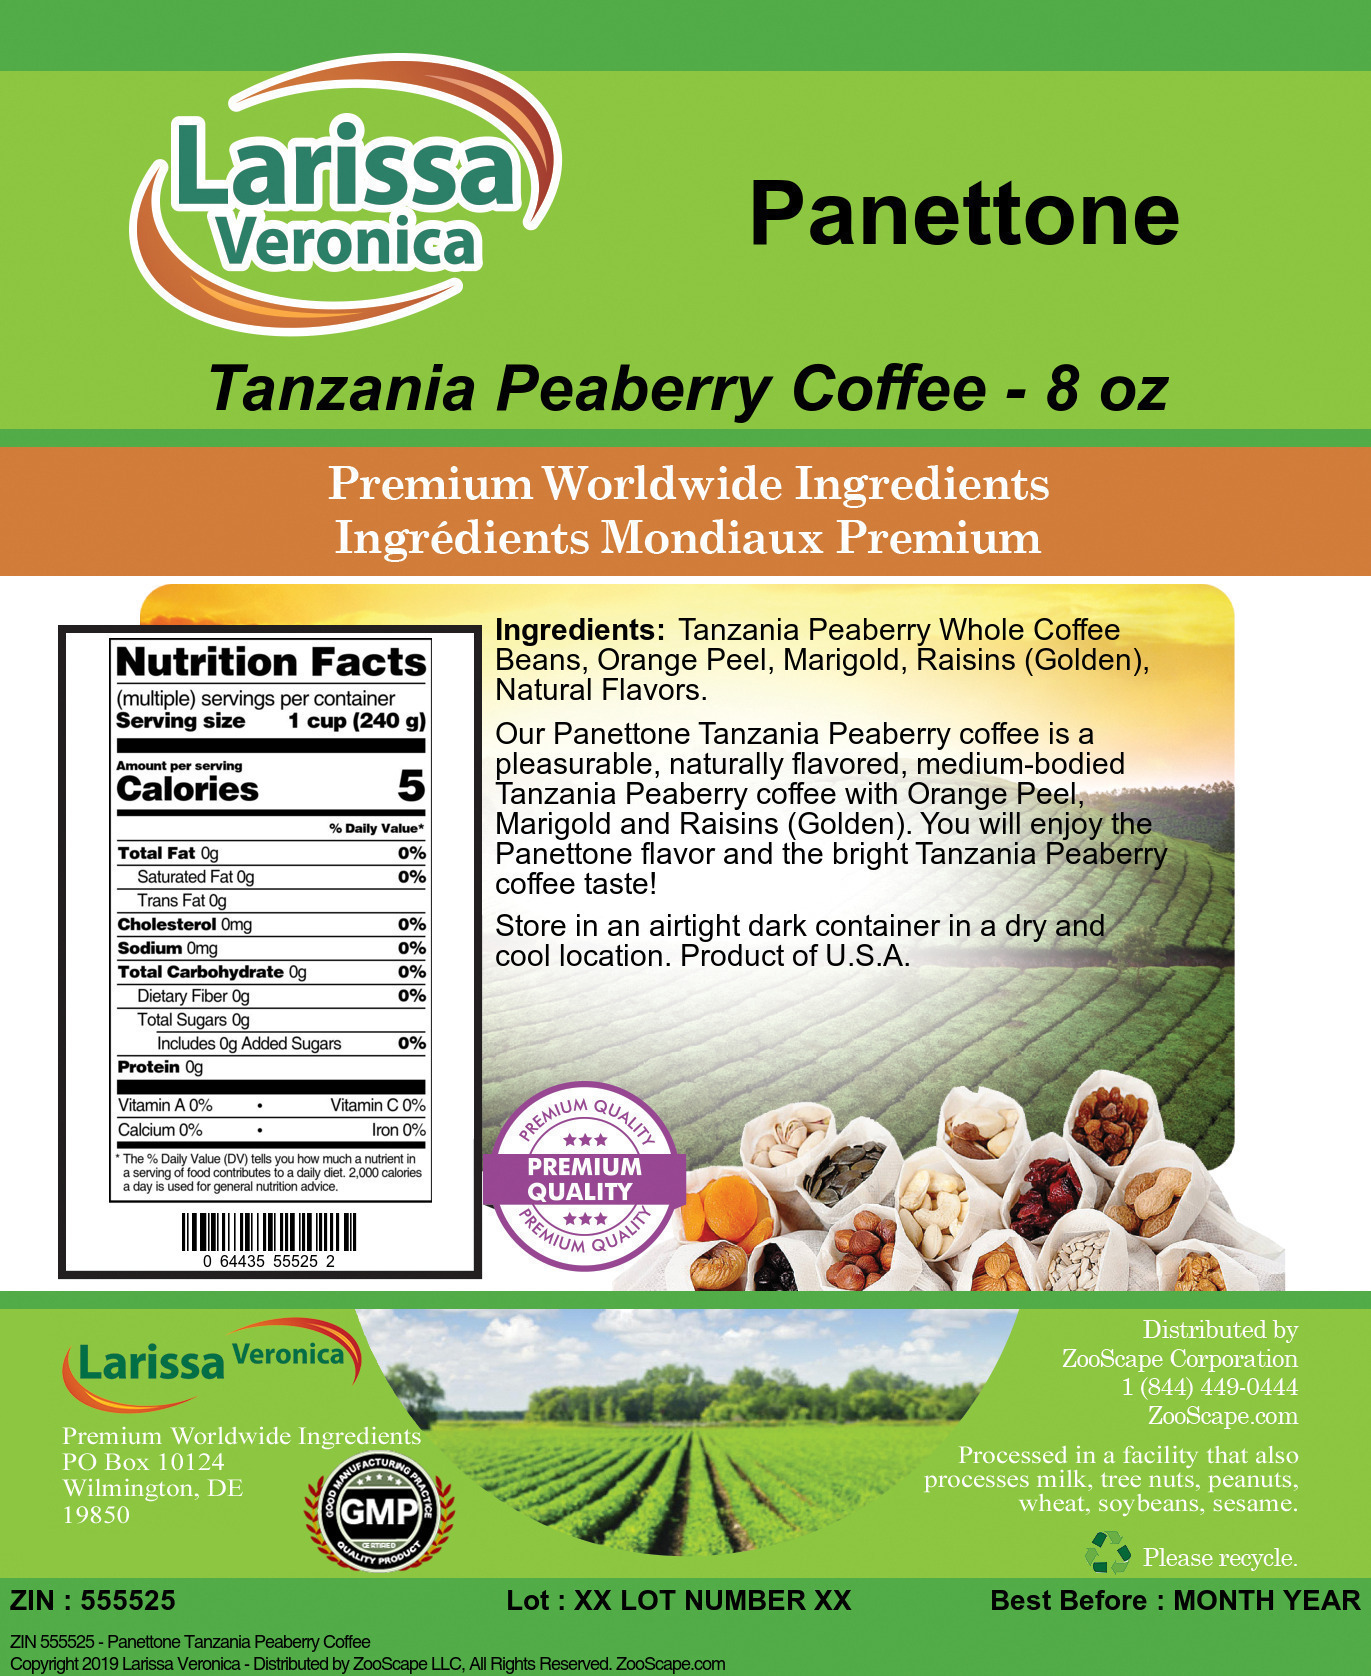 Panettone Tanzania Peaberry Coffee - Label